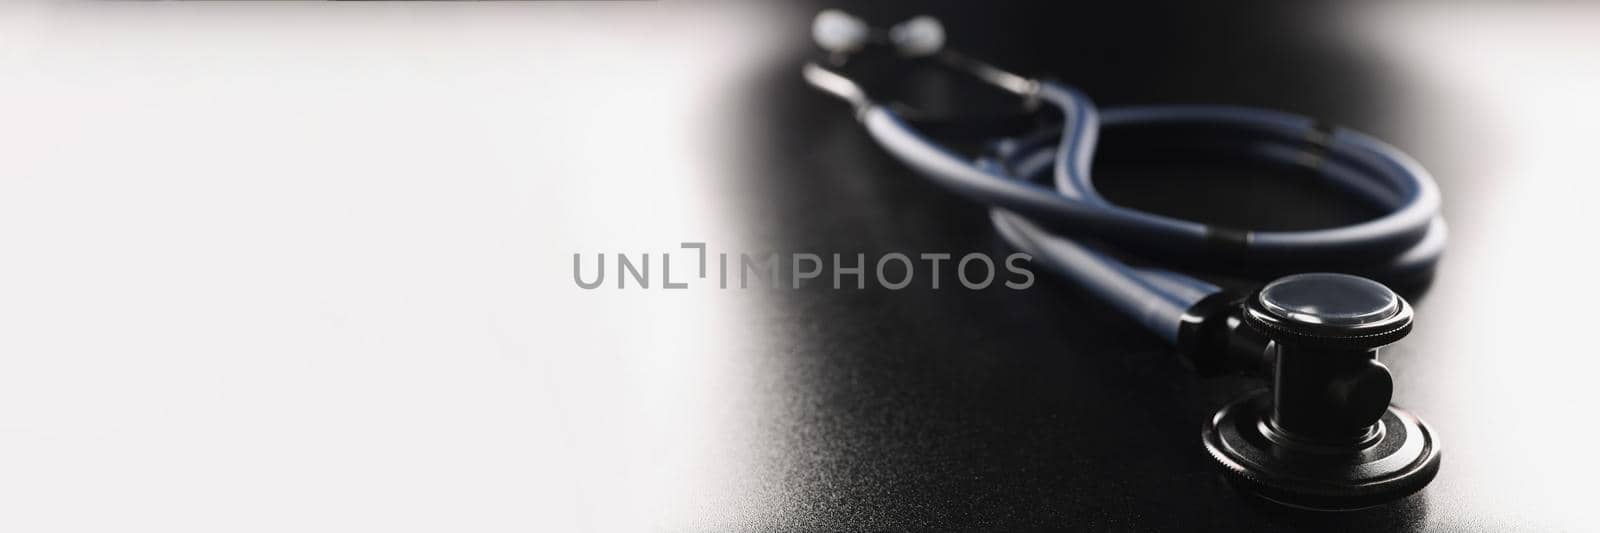 Dark blue stethoscope lying on black background closeup. Medical education concept